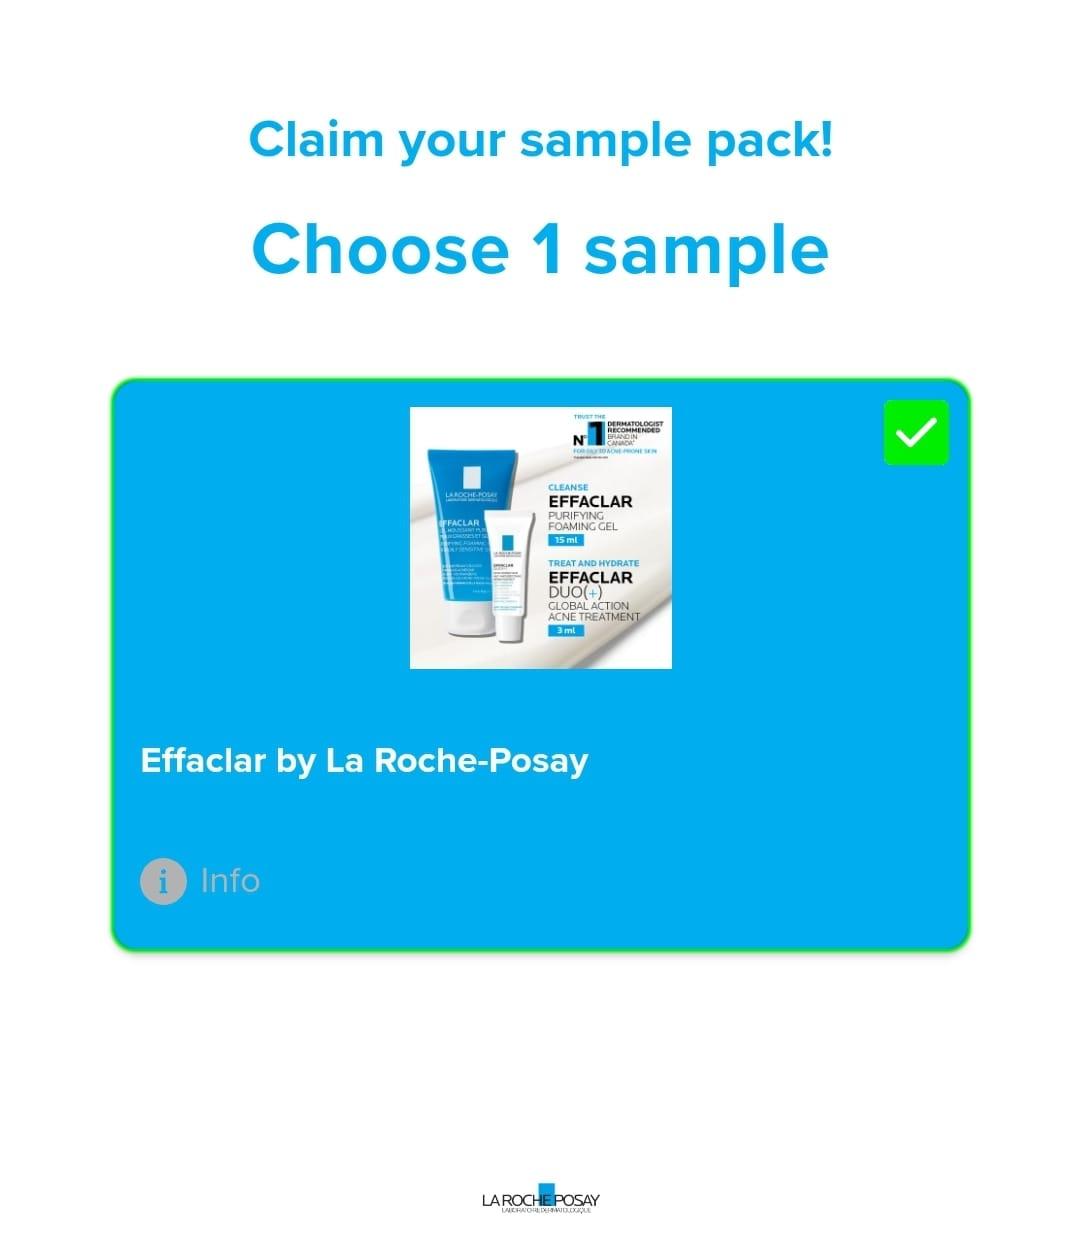 La Roche Posay Free Samples